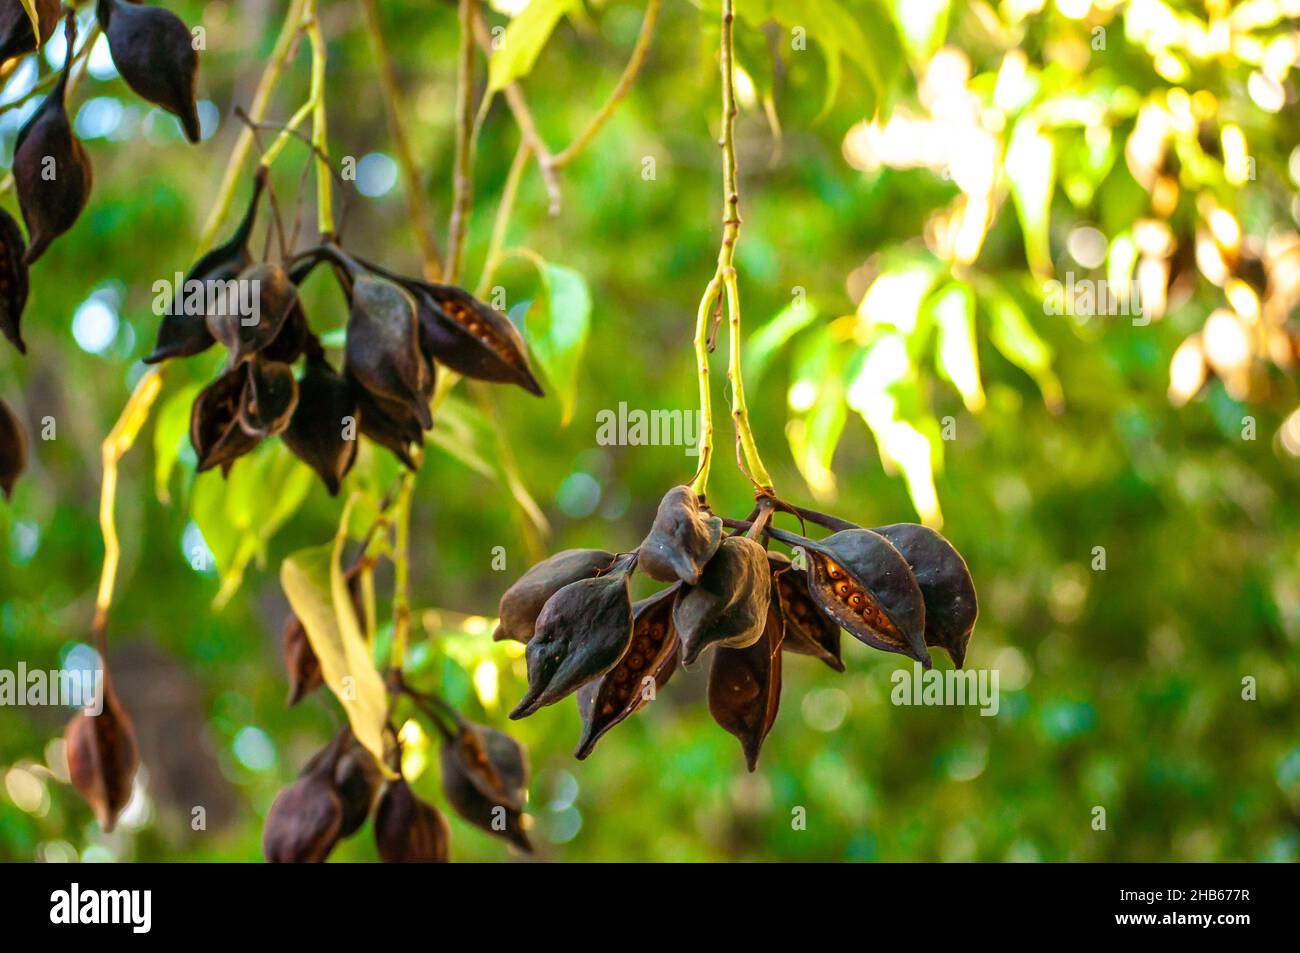 kurrajong, Brachychiton populneus, seeds and leaves, urban tree Stock Photo